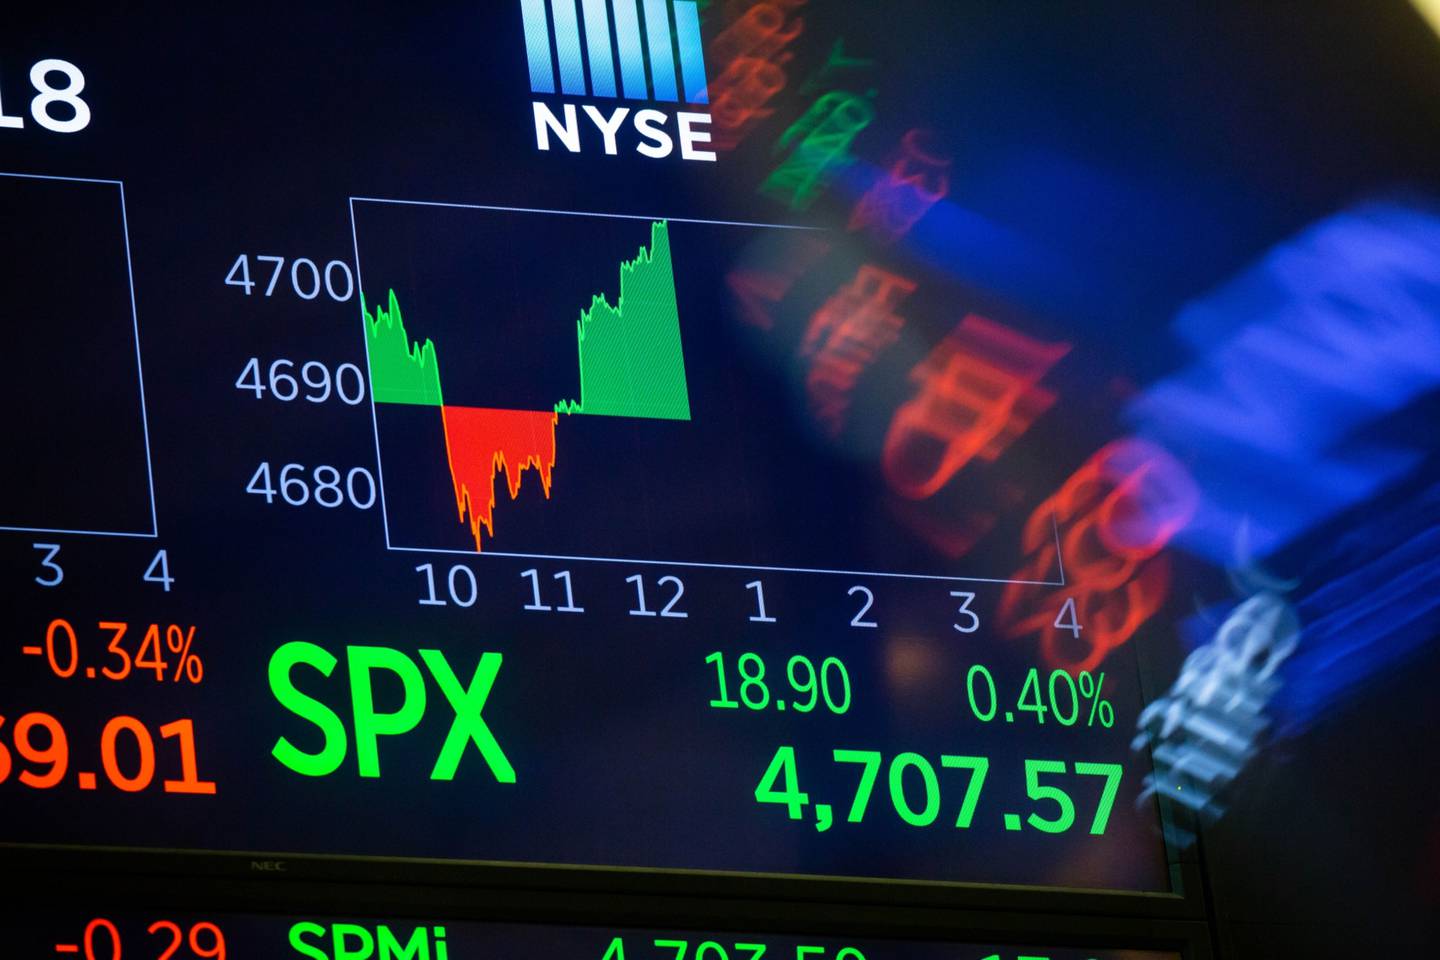 Futuros de Wall Street apontam baixa no mercado nesta sexta